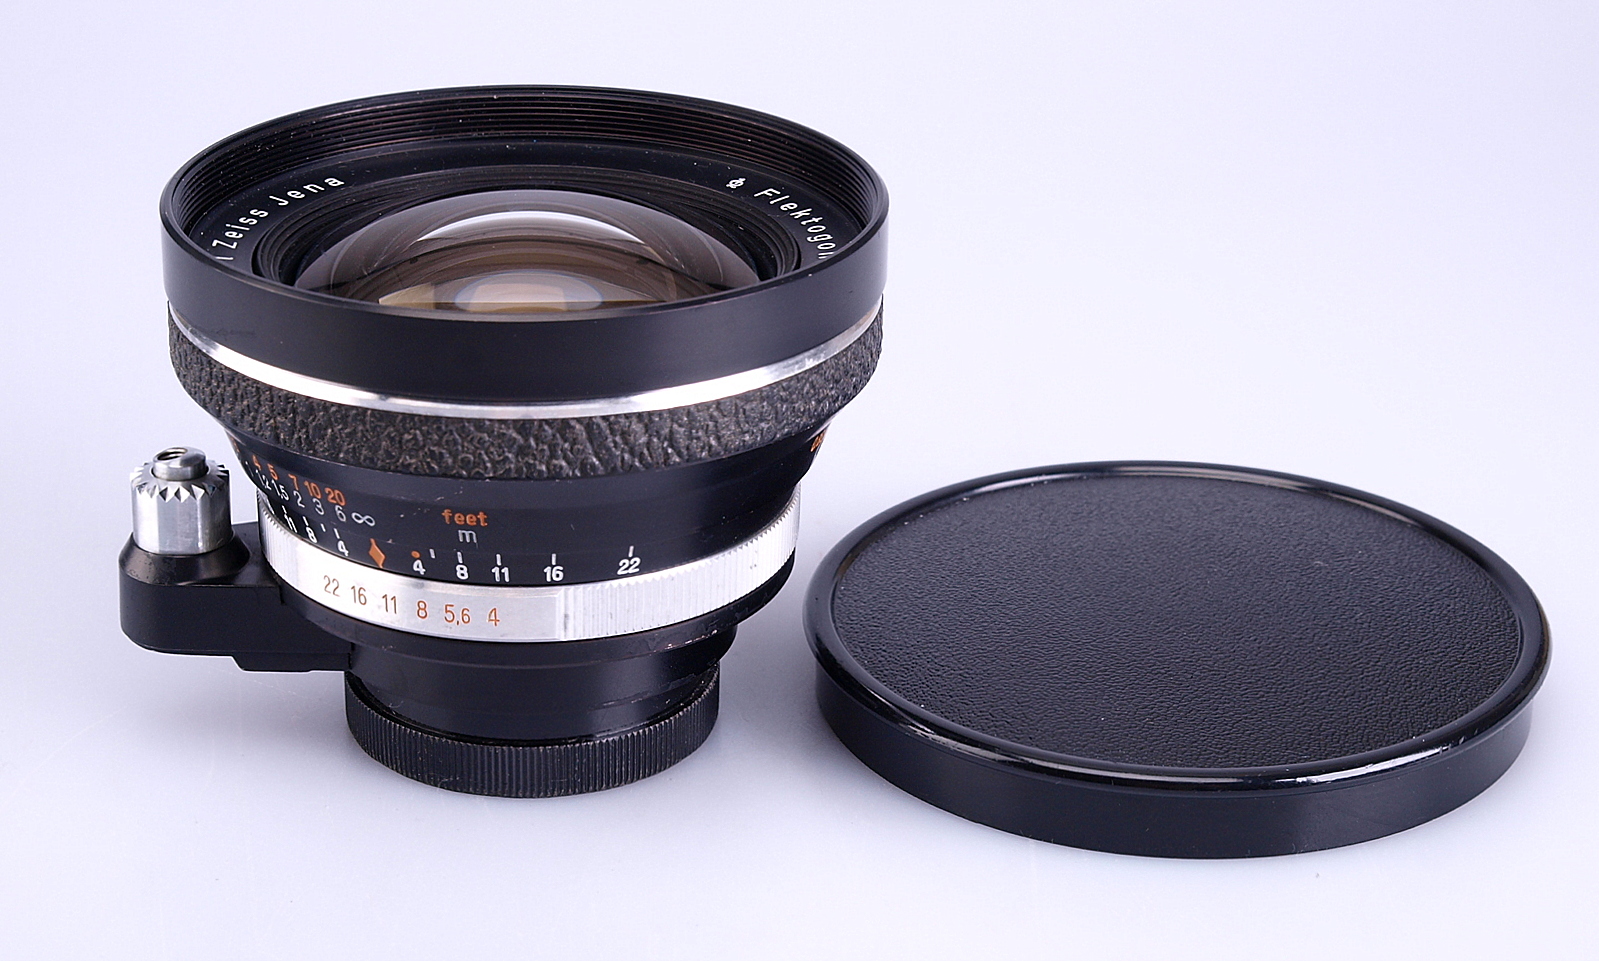 Carl Zeiss Jena. Flektogon 25mm F4 Wide-Angle prime lens for 